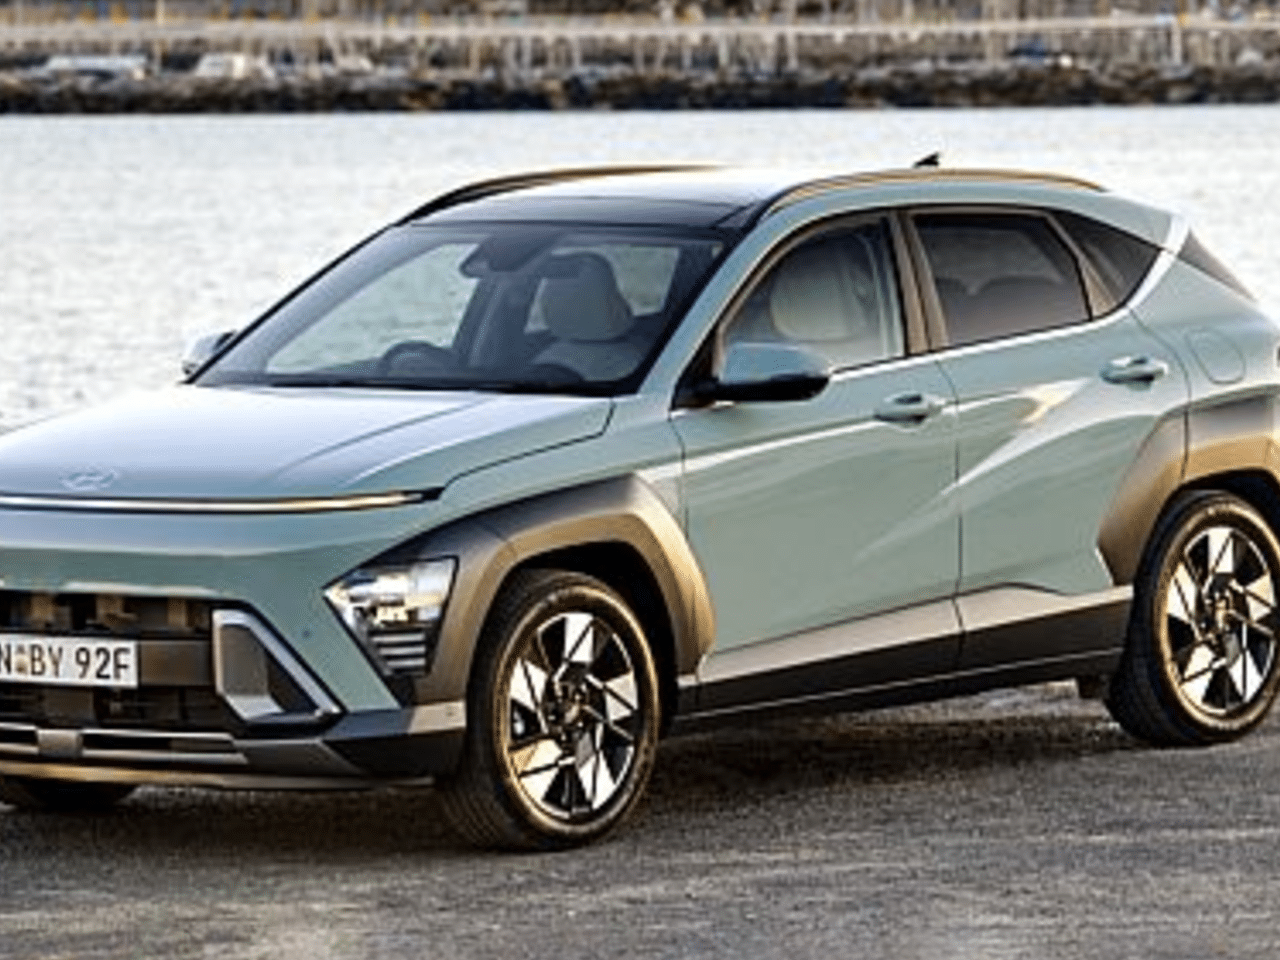 Hyundai Australia Likely to Ditch High-Performance Option for New Kona